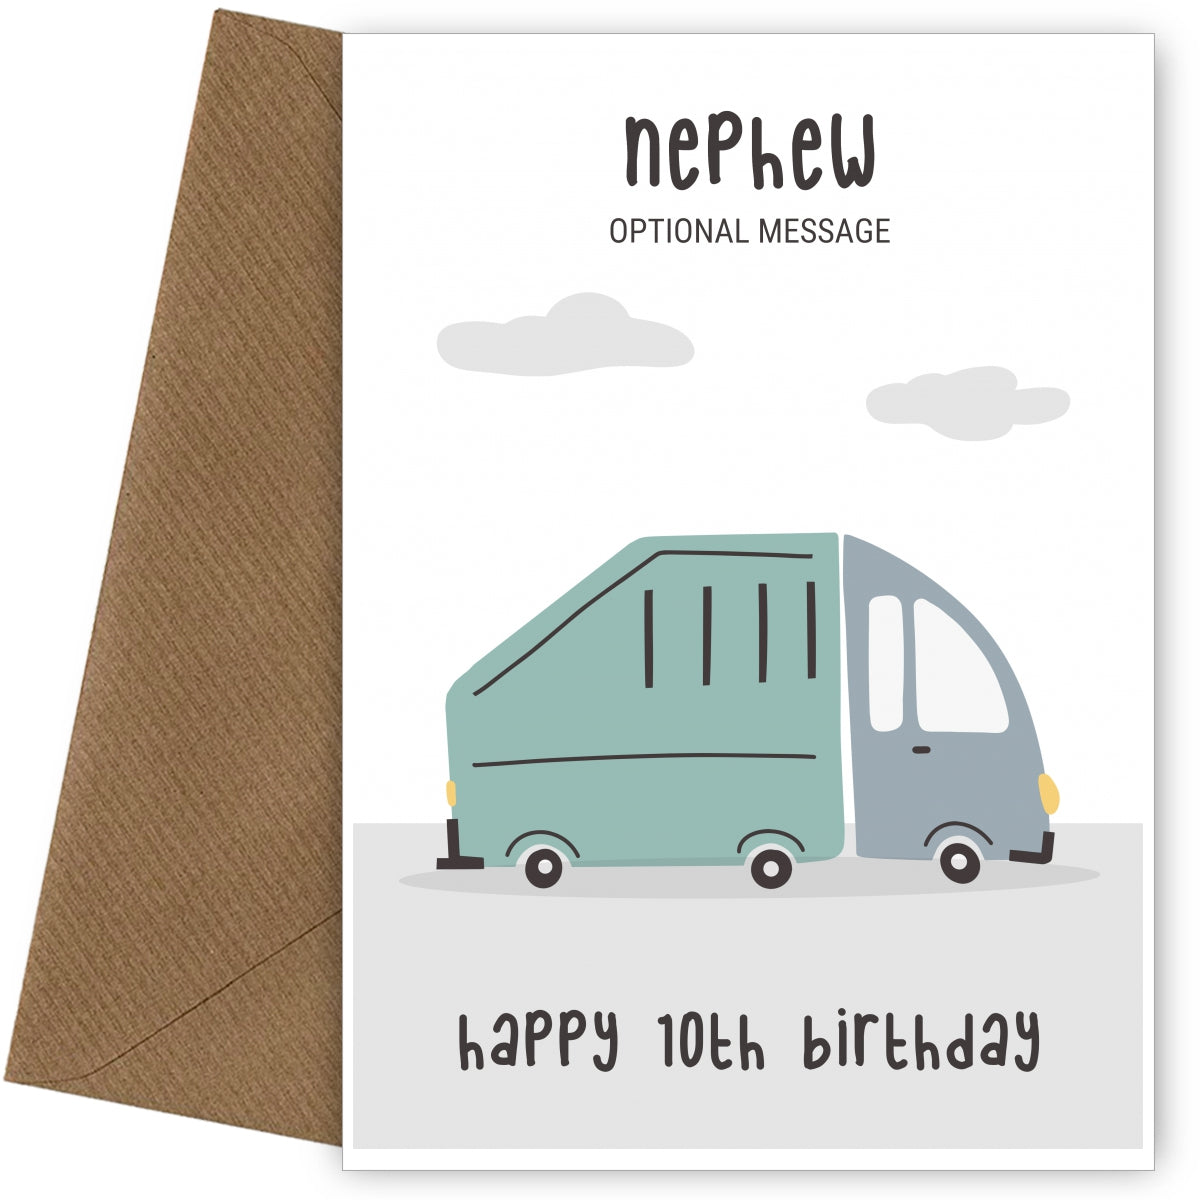 Fun Vehicles 10th Birthday Card for Nephew - Garbage Truck